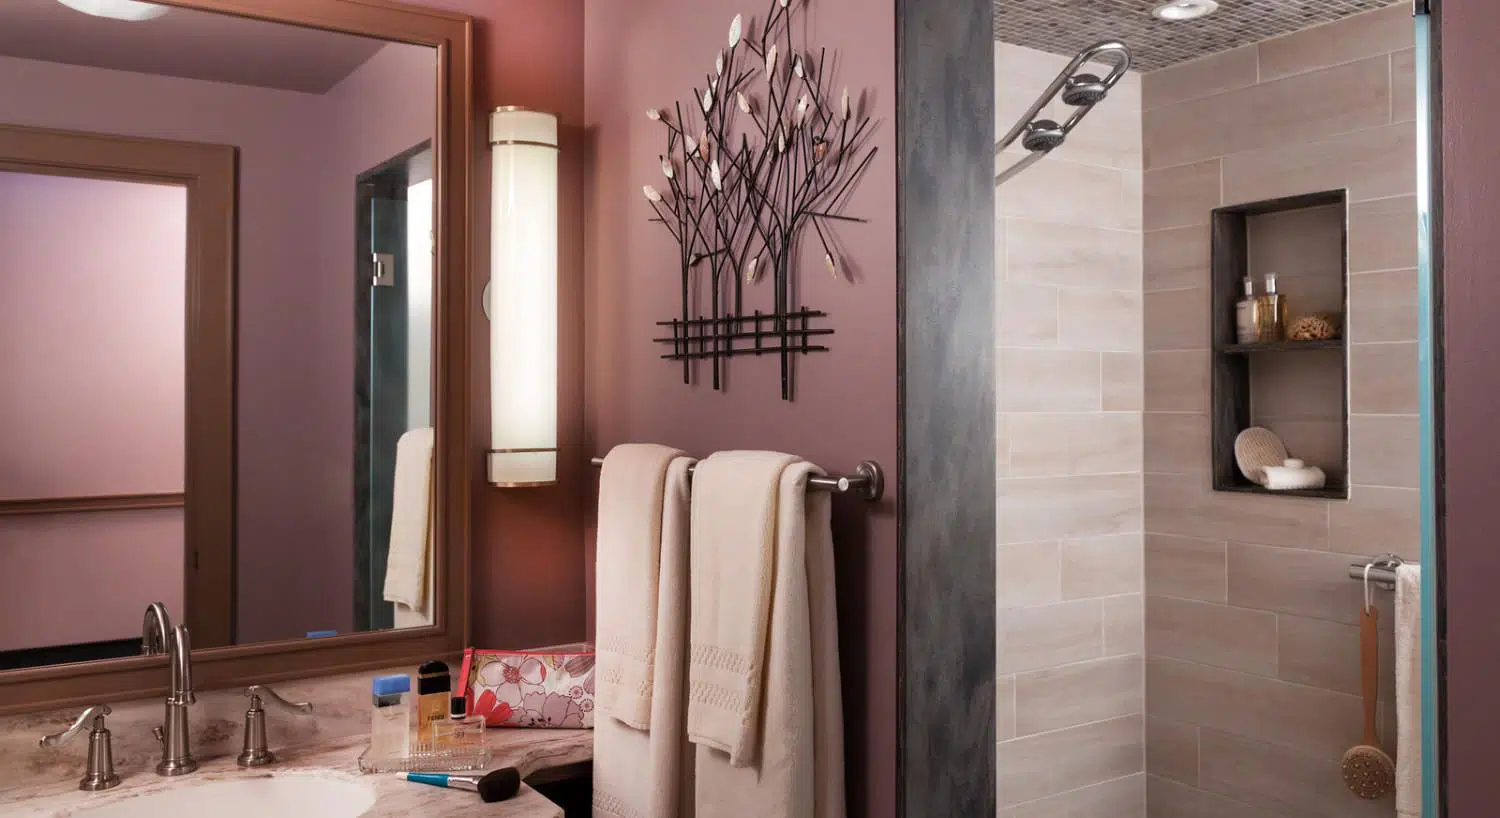 Bathroom with light lavendar walls, marble sink, light tan tiled stand up shower, and large wooden framed mirror